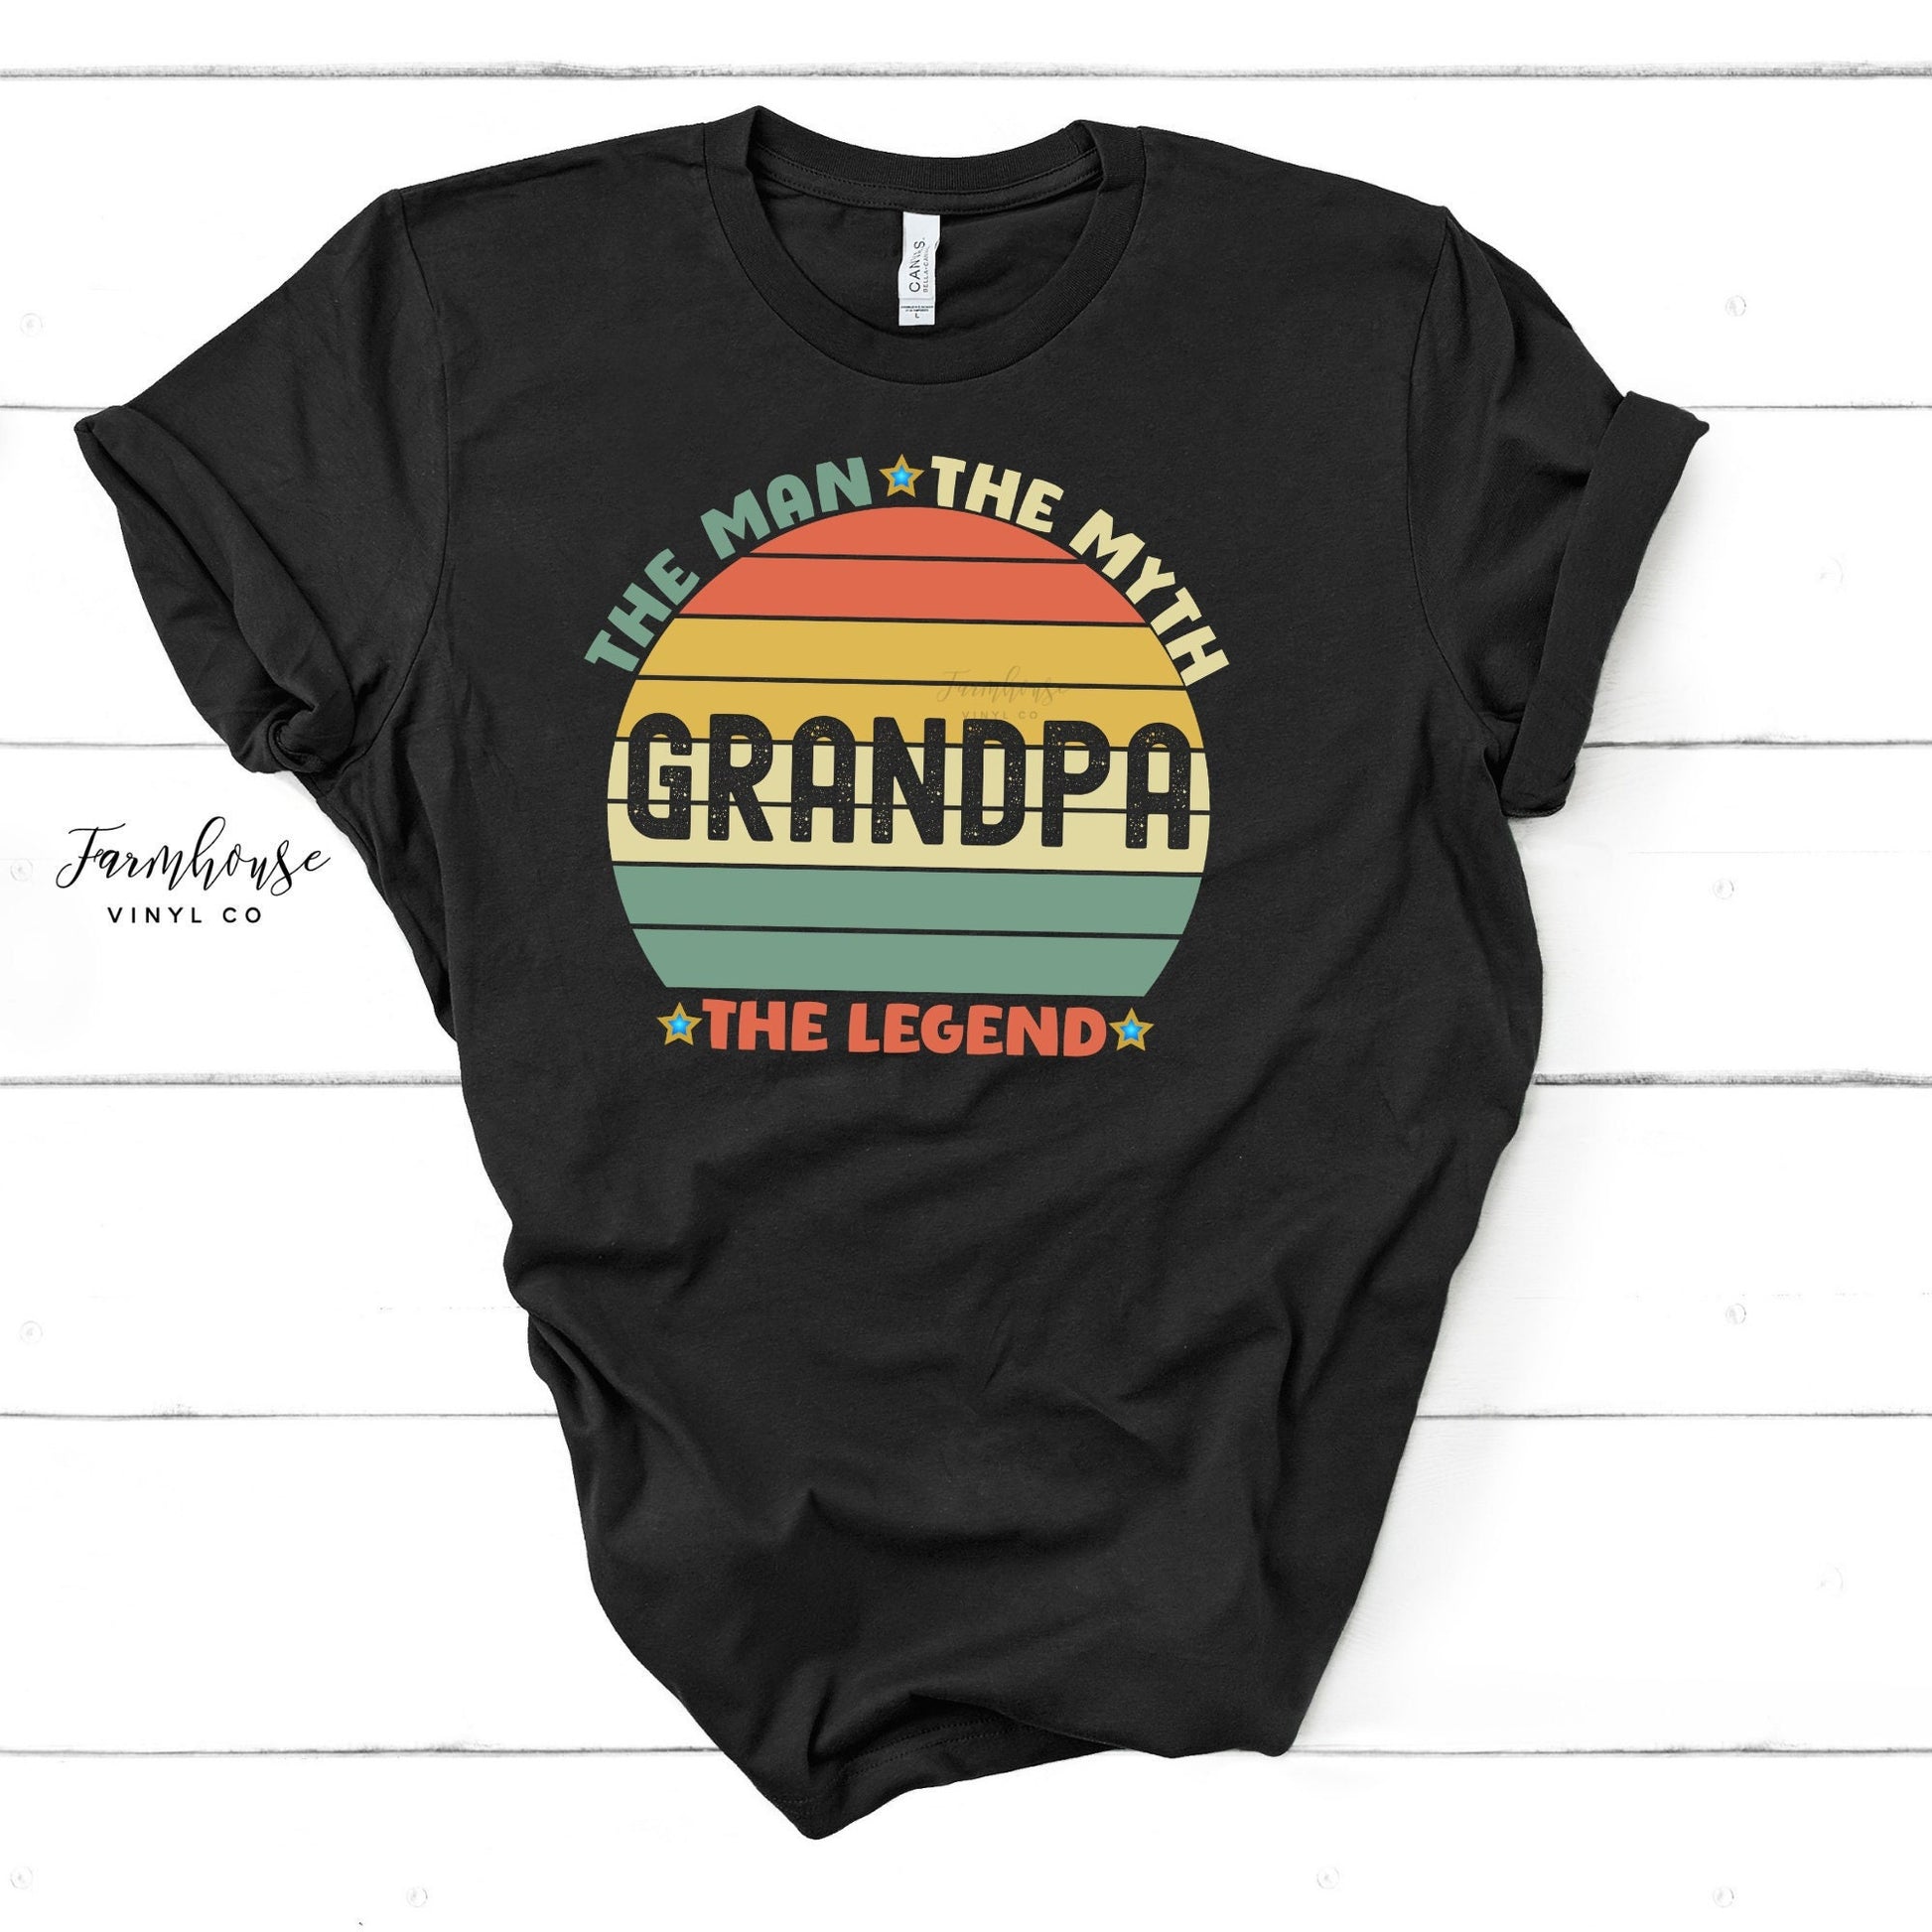 The Man The Myth The Legend Grandpa Shirt - Farmhouse Vinyl Co